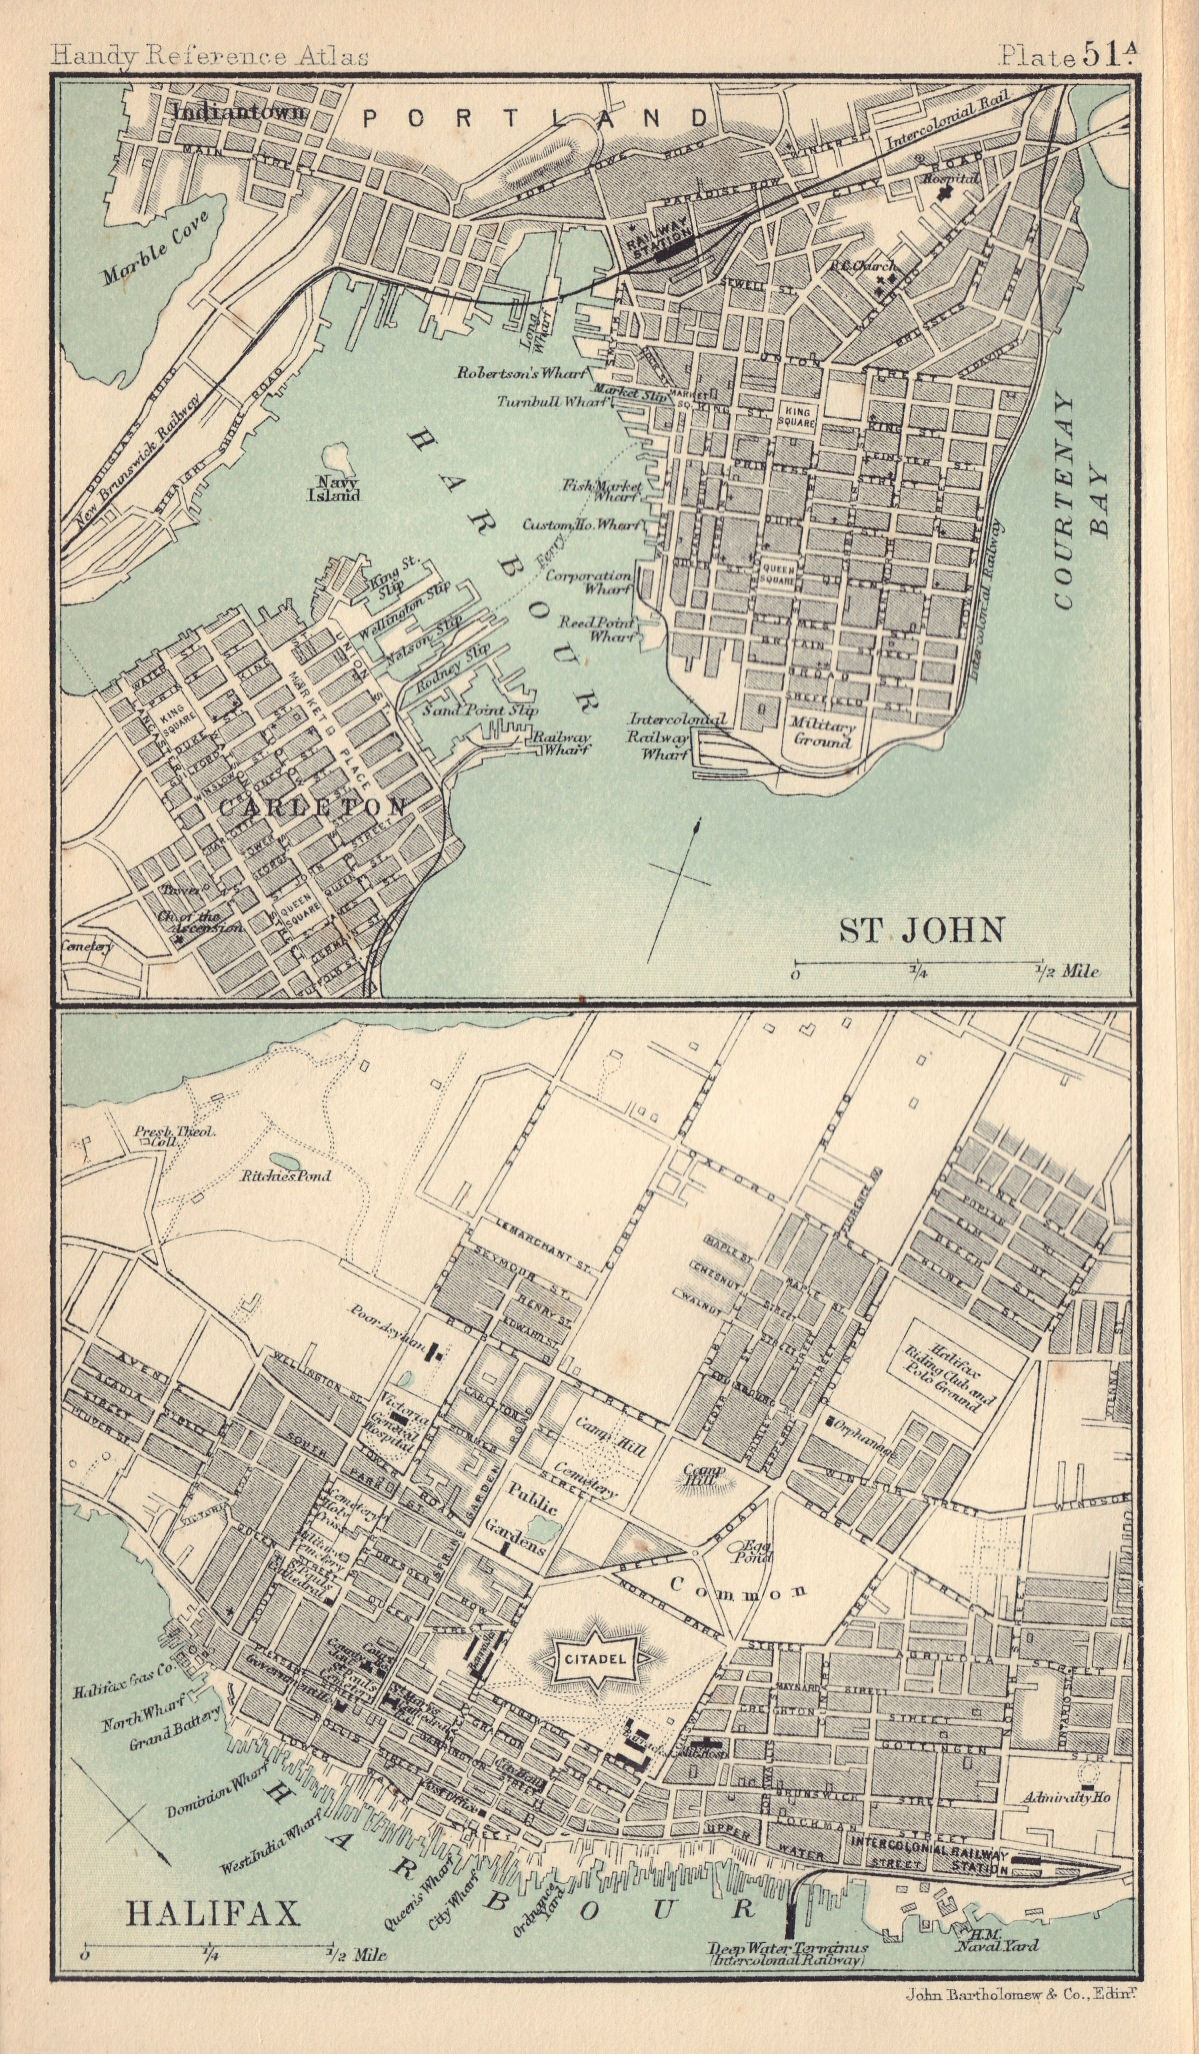 Associate Product Halifax & St. John town/city plans. Canada. BARTHOLOMEW 1898 old antique map